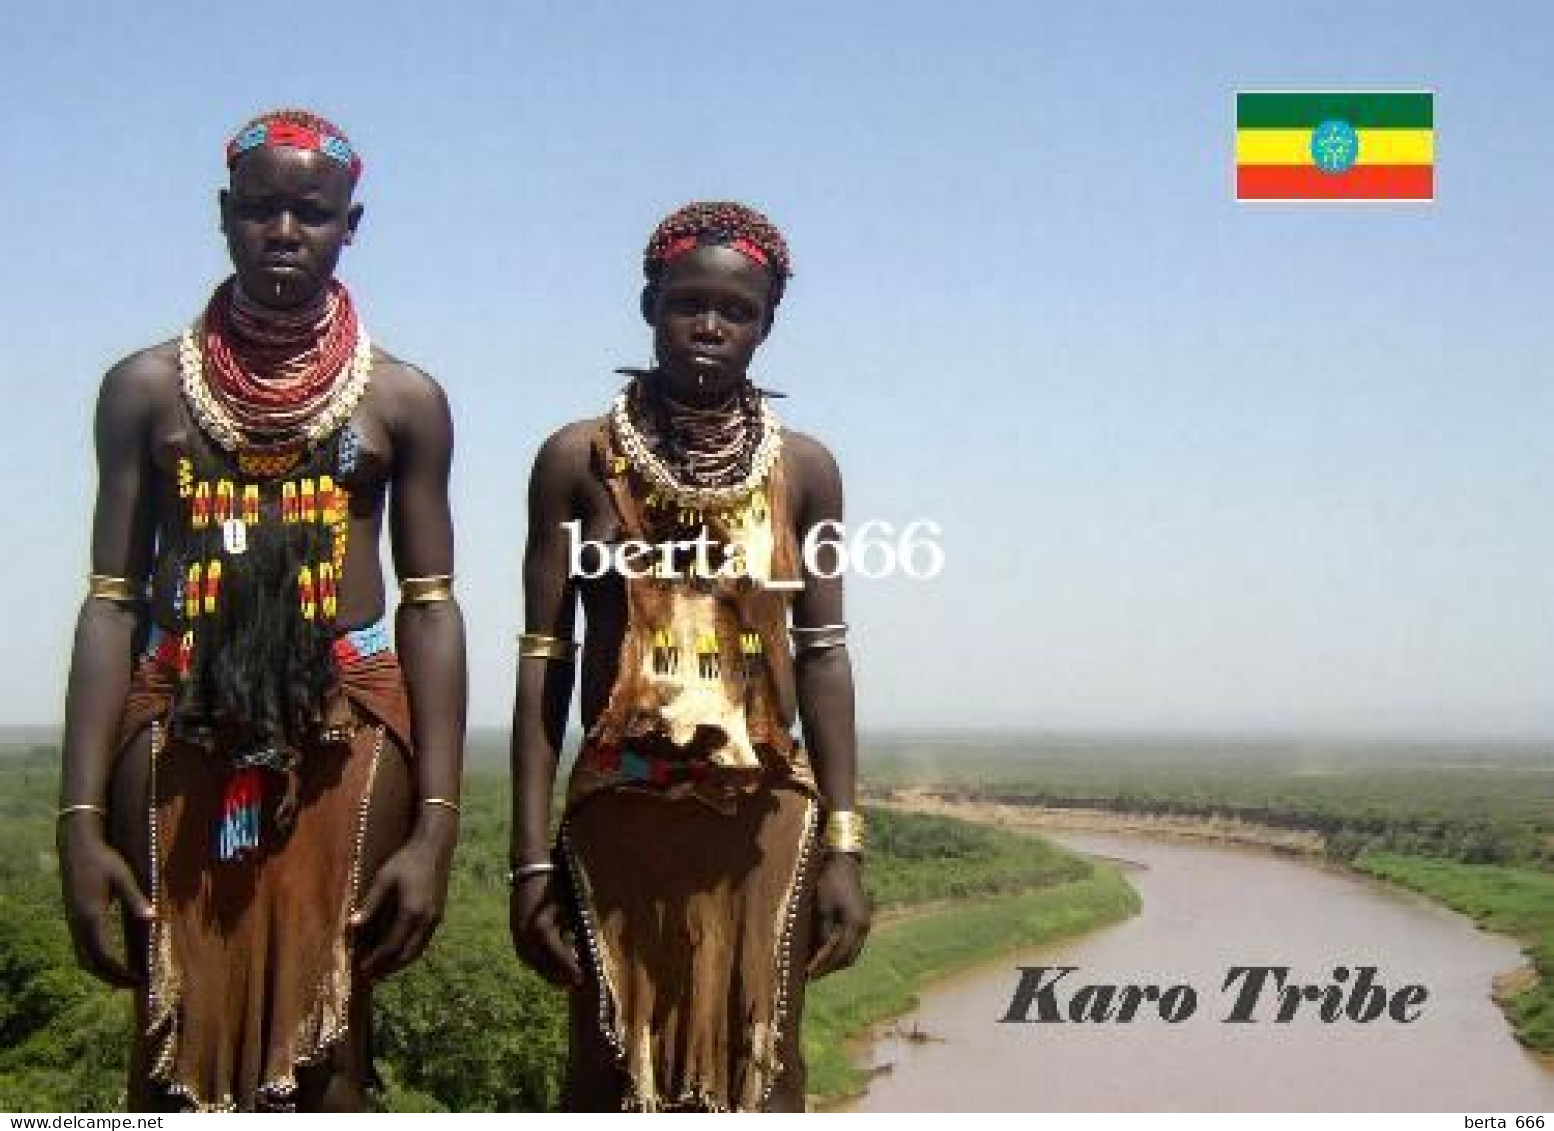 Ethiopia Karo People New Postcard - Afrika